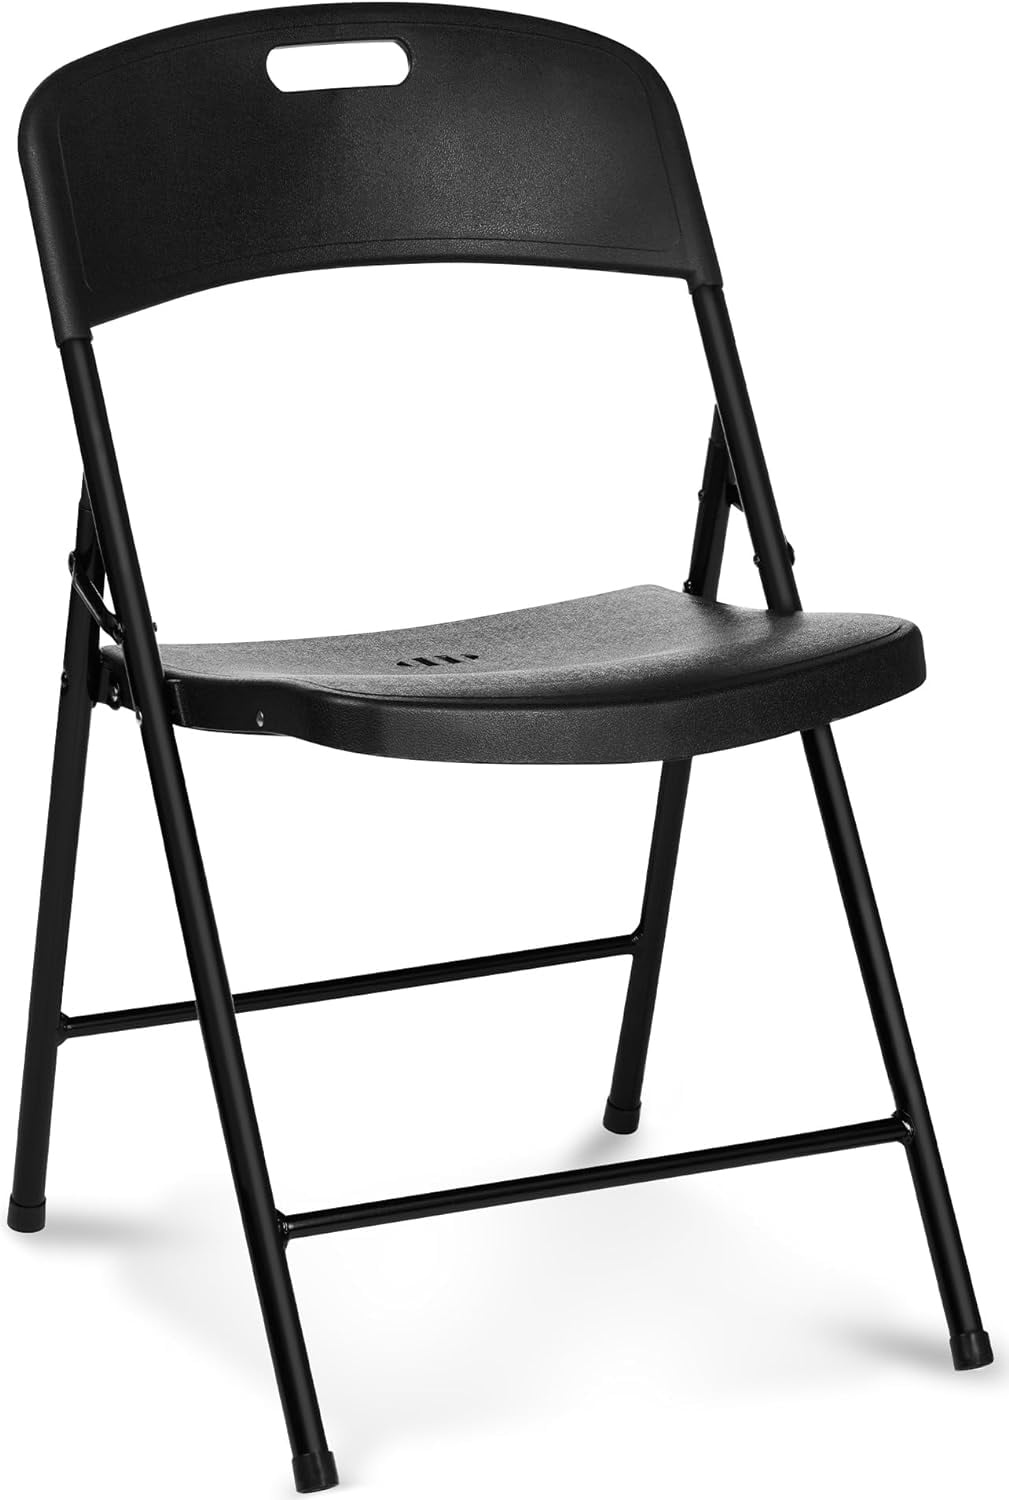 Oline Folding Chair, Indoor Outdoor Plastic Commercial Stackable ...